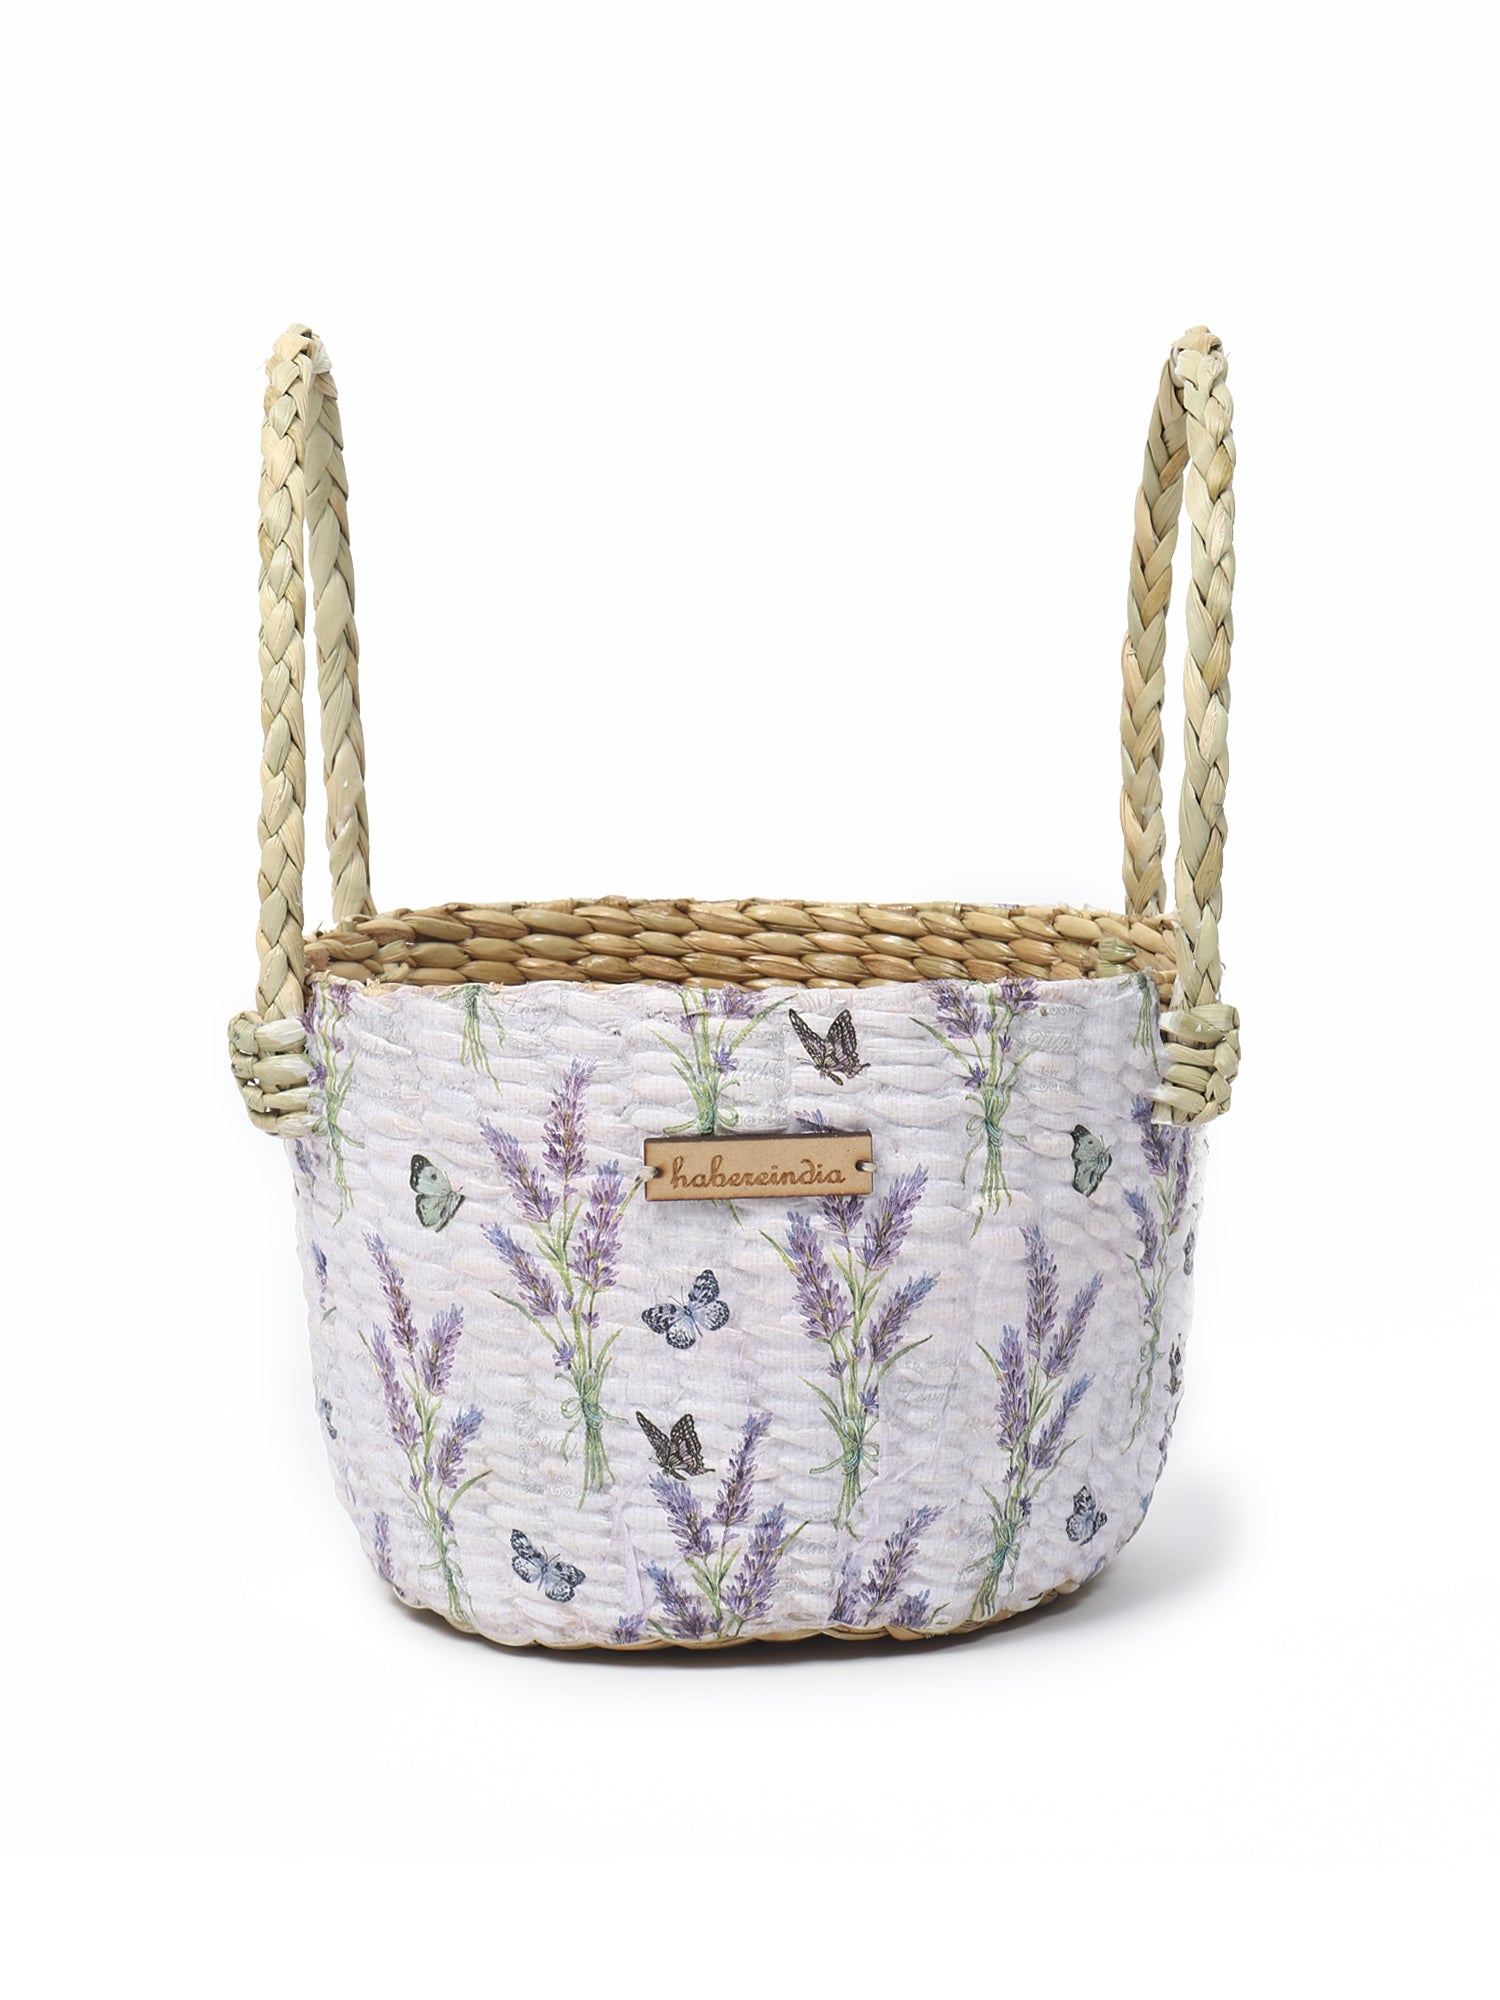 Seagrass Fruit Basket